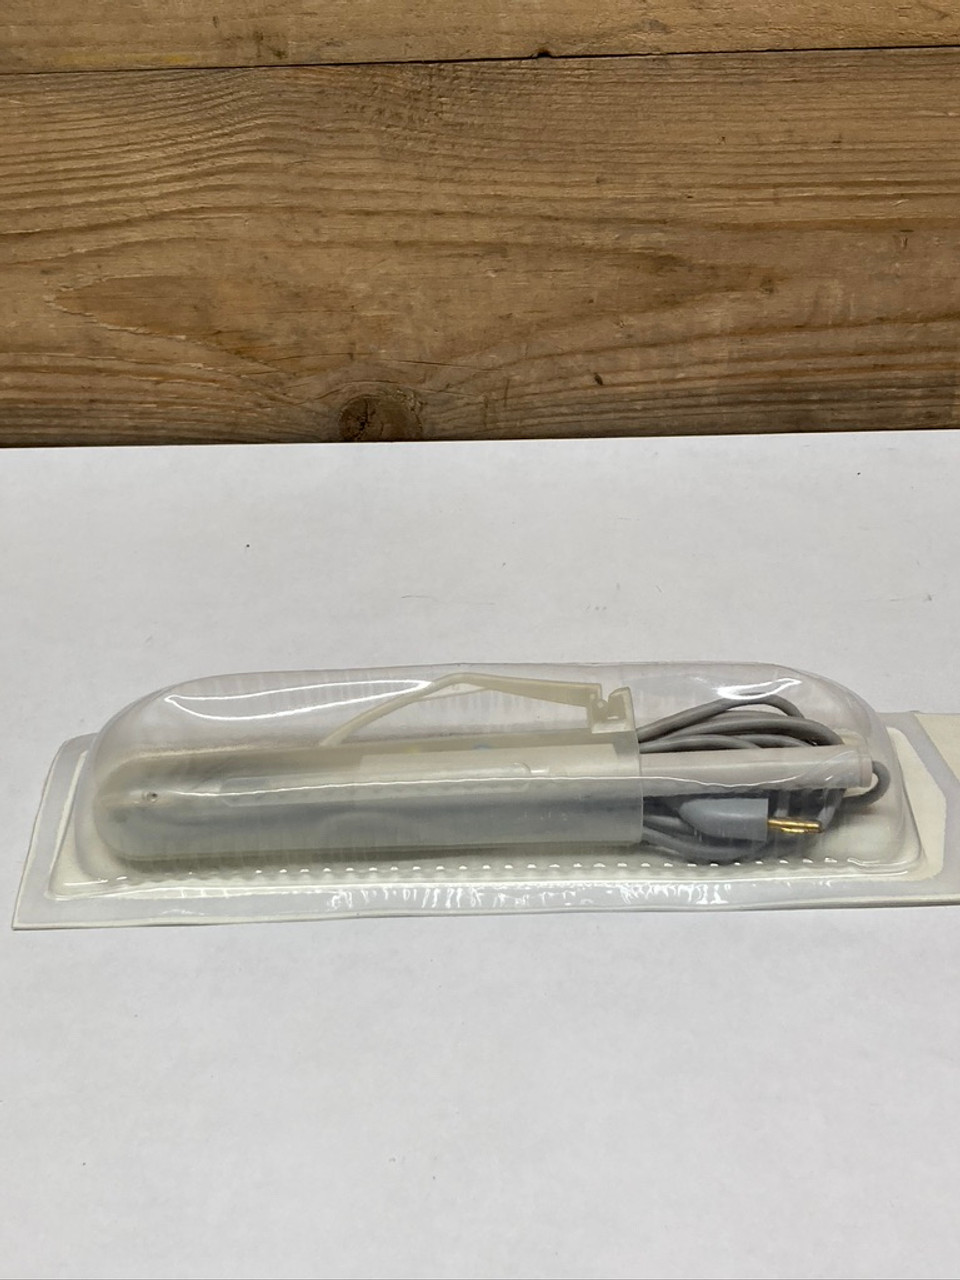 9) Tech-Switch Pencil Type Electrosurgery Electrode Handle 9164 Concept